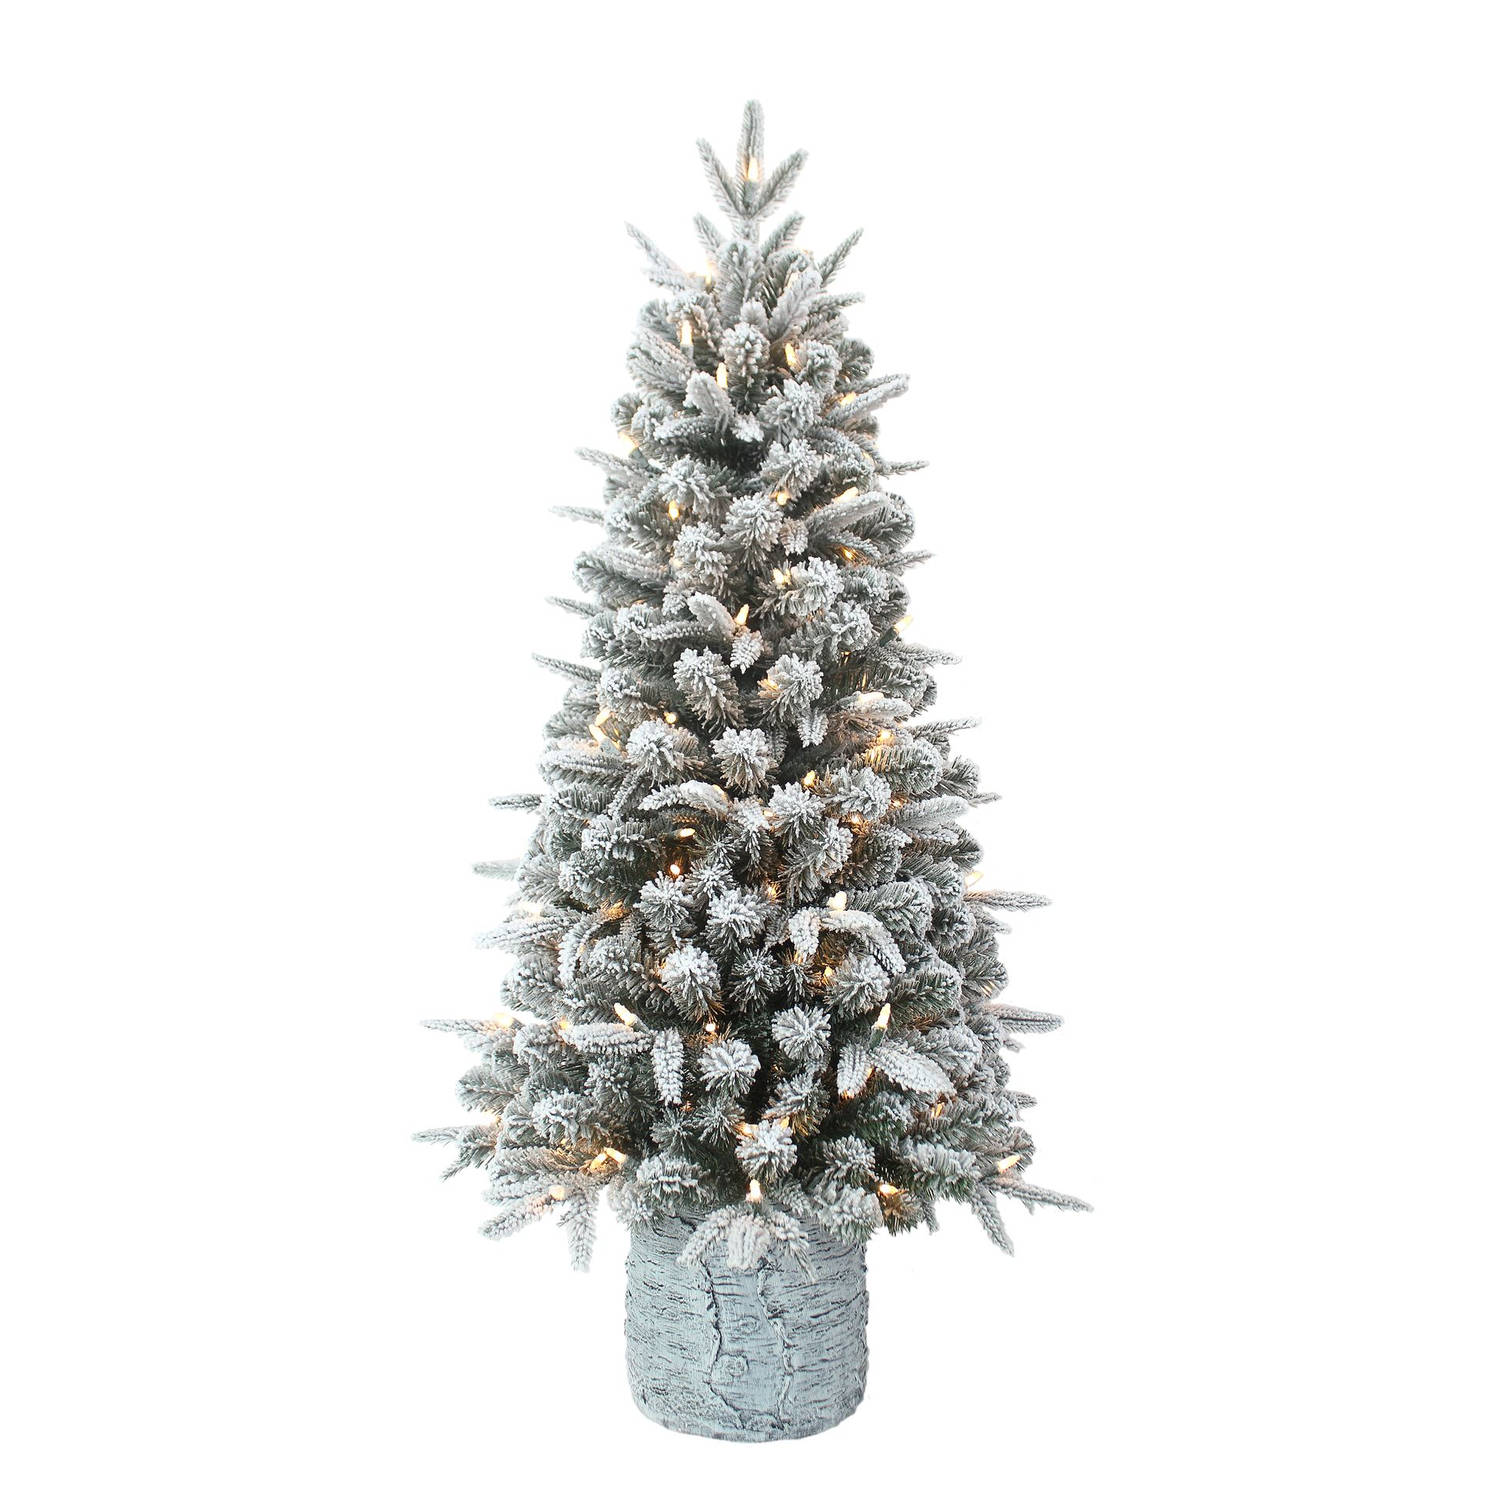 Aspen kunstkerstboom - 122 cm - groen - 140 ledlampjes - besneeuwd - houten pot